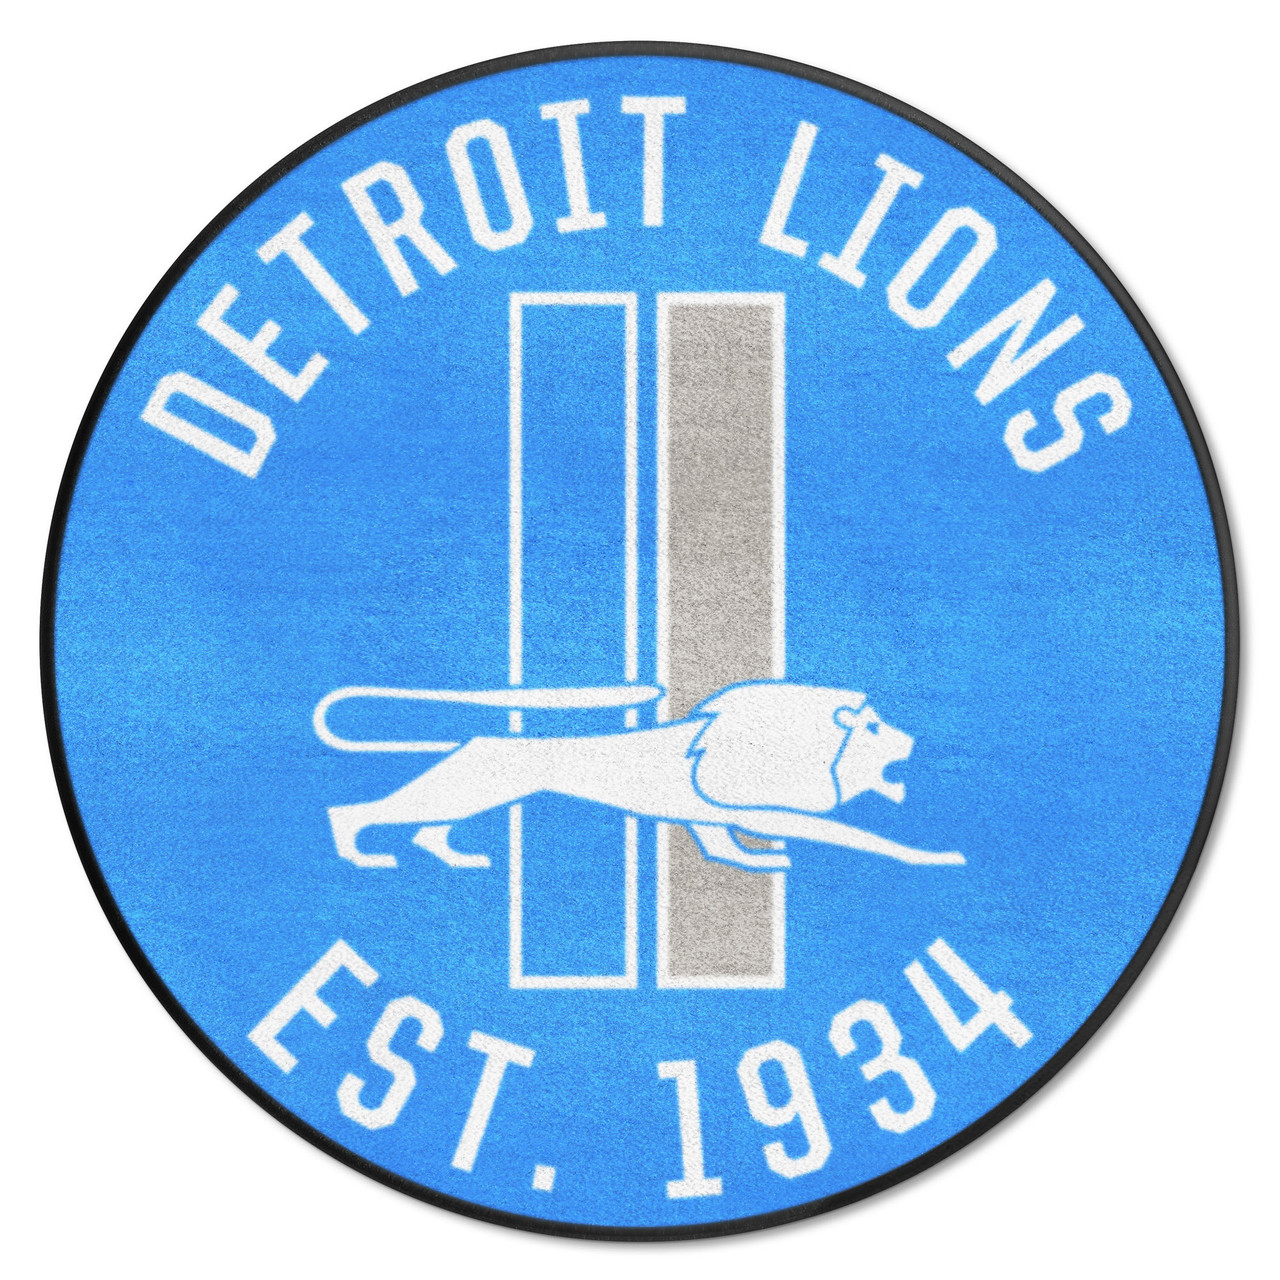 Detroit Lions All-Star Mat - Retro